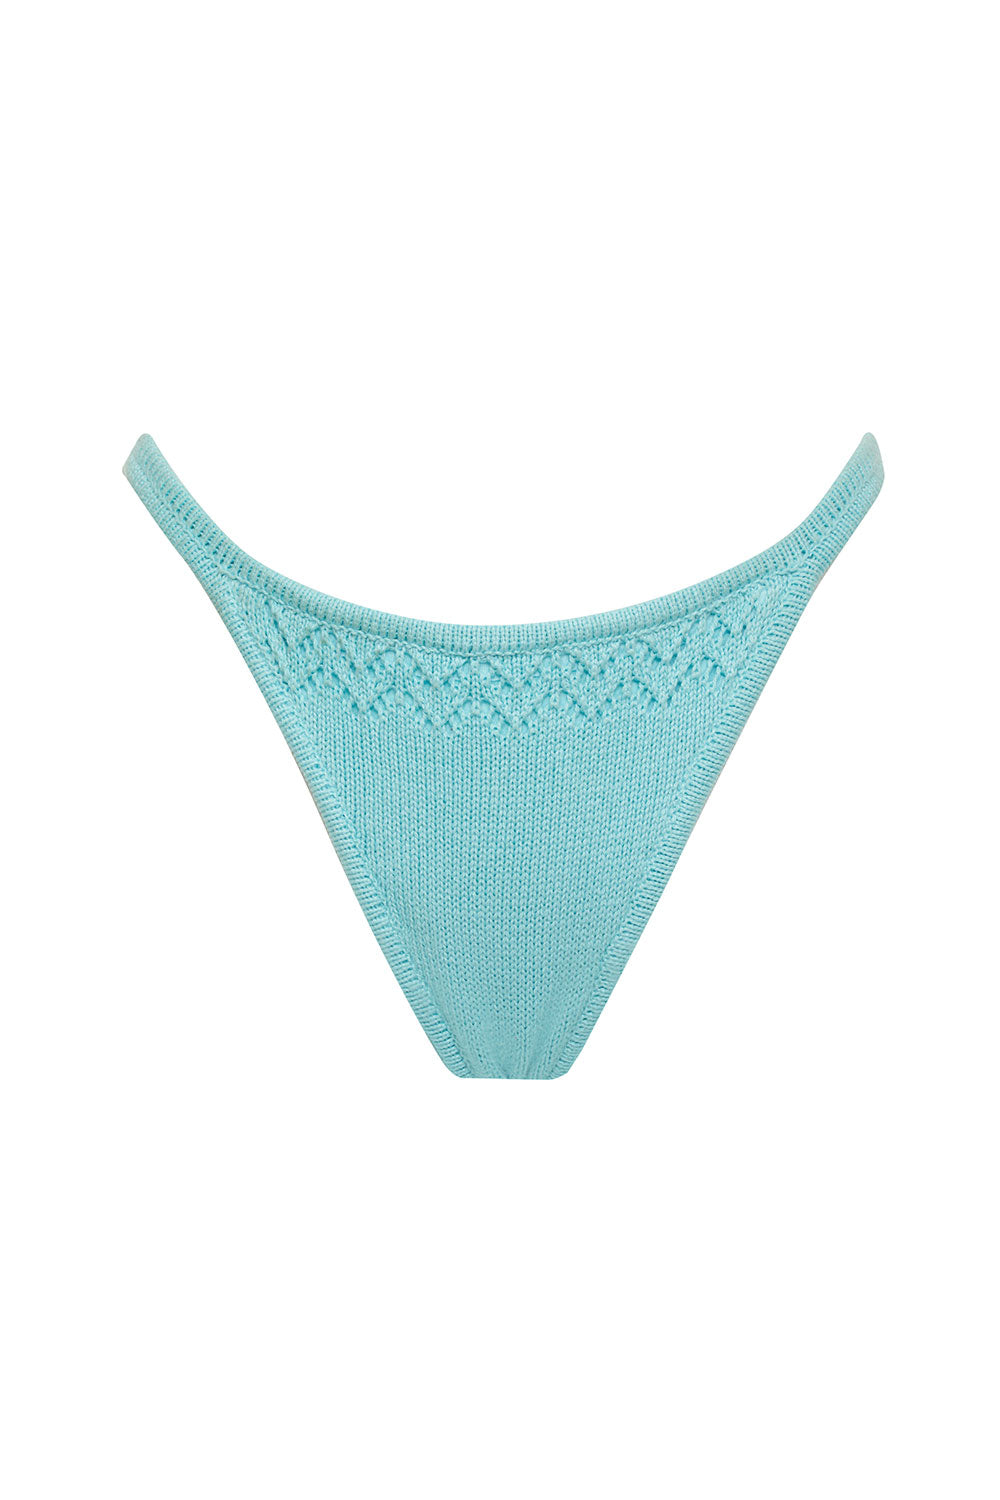 x GUIZIO Tide Crochet Cheeky Bikini Bottom - Aqua Embroidery